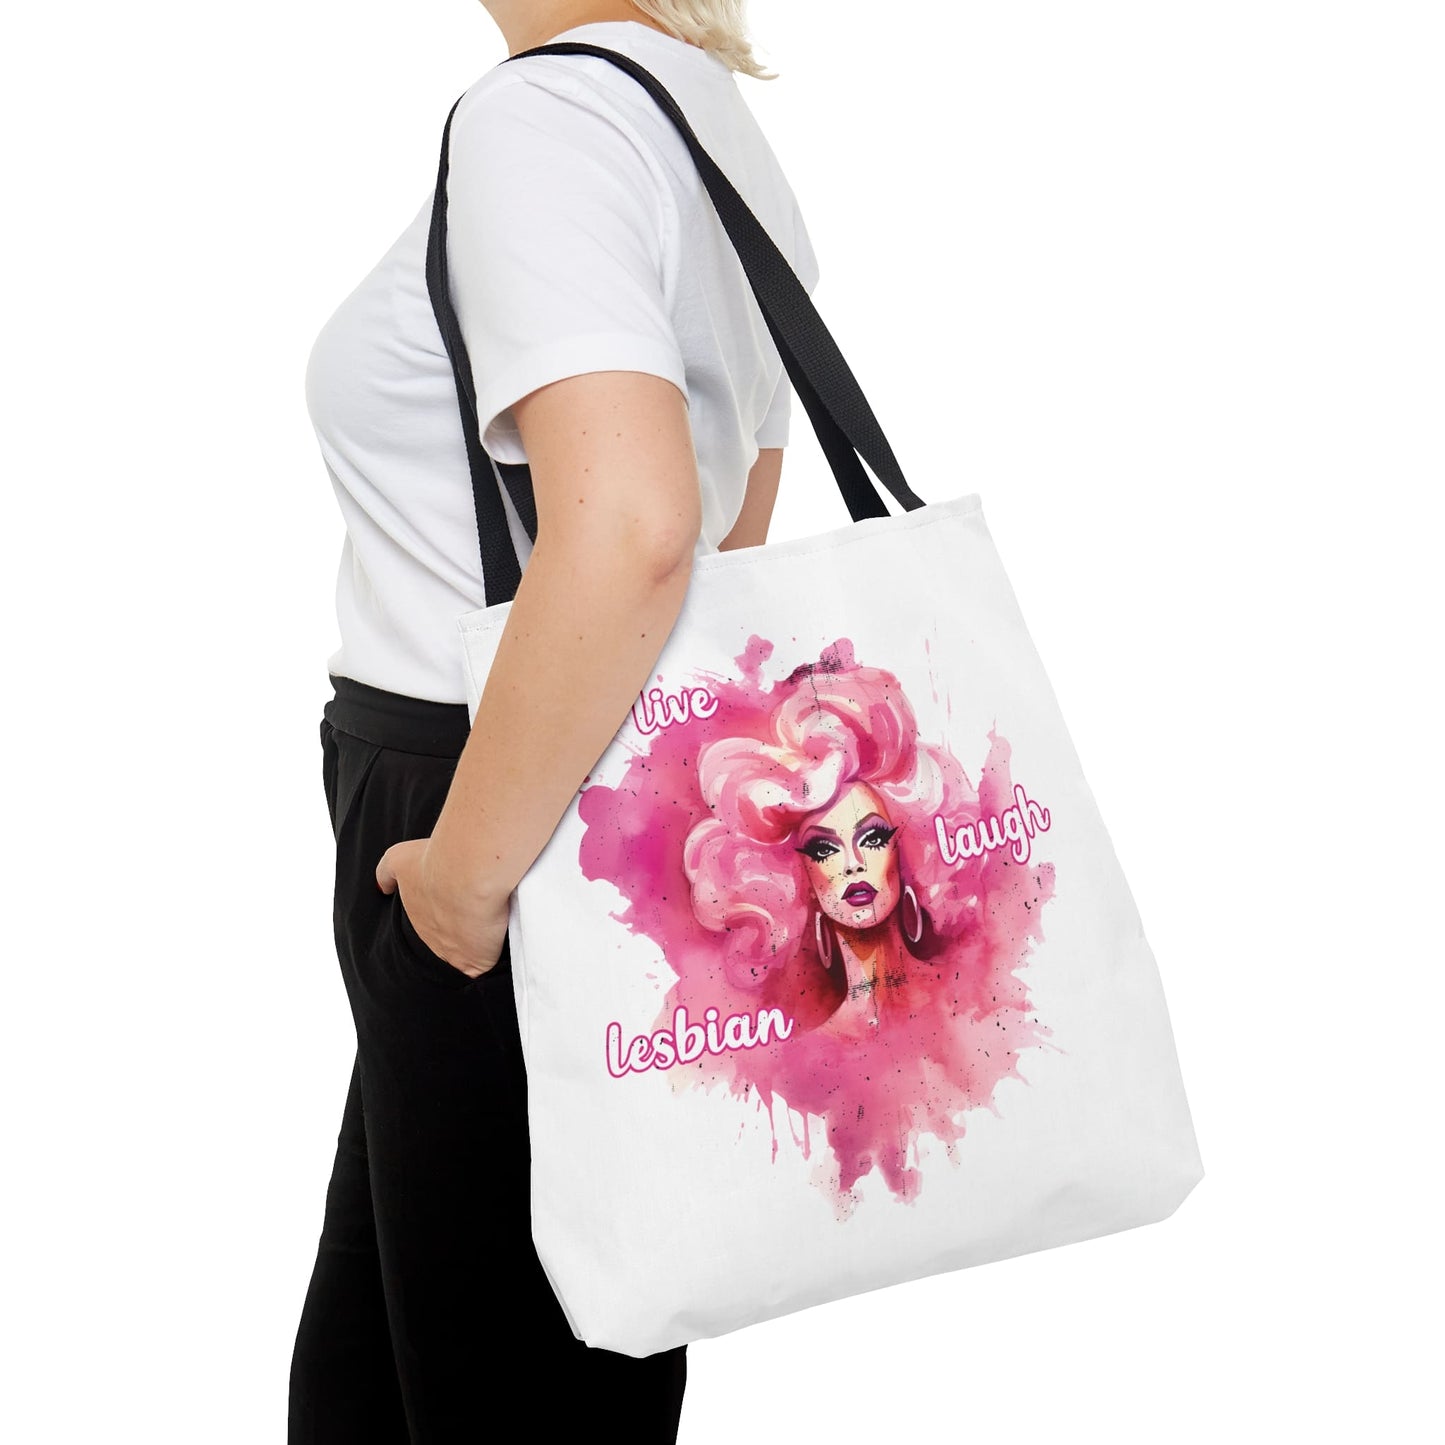 live laugh lesbian tote bag, large